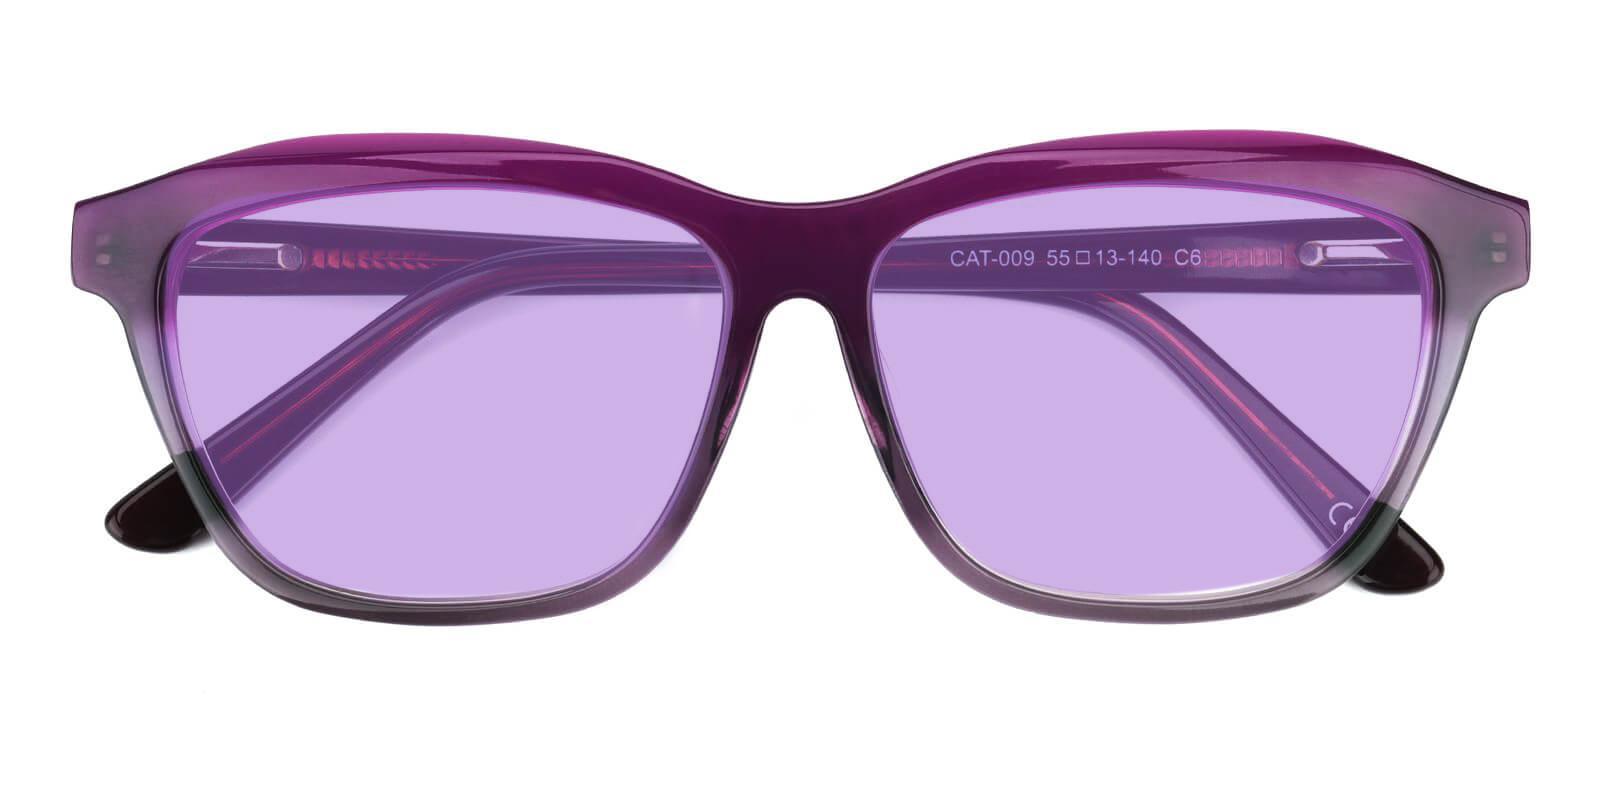 Morning Purple Acetate SpringHinges , Sunglasses , UniversalBridgeFit Frames from ABBE Glasses